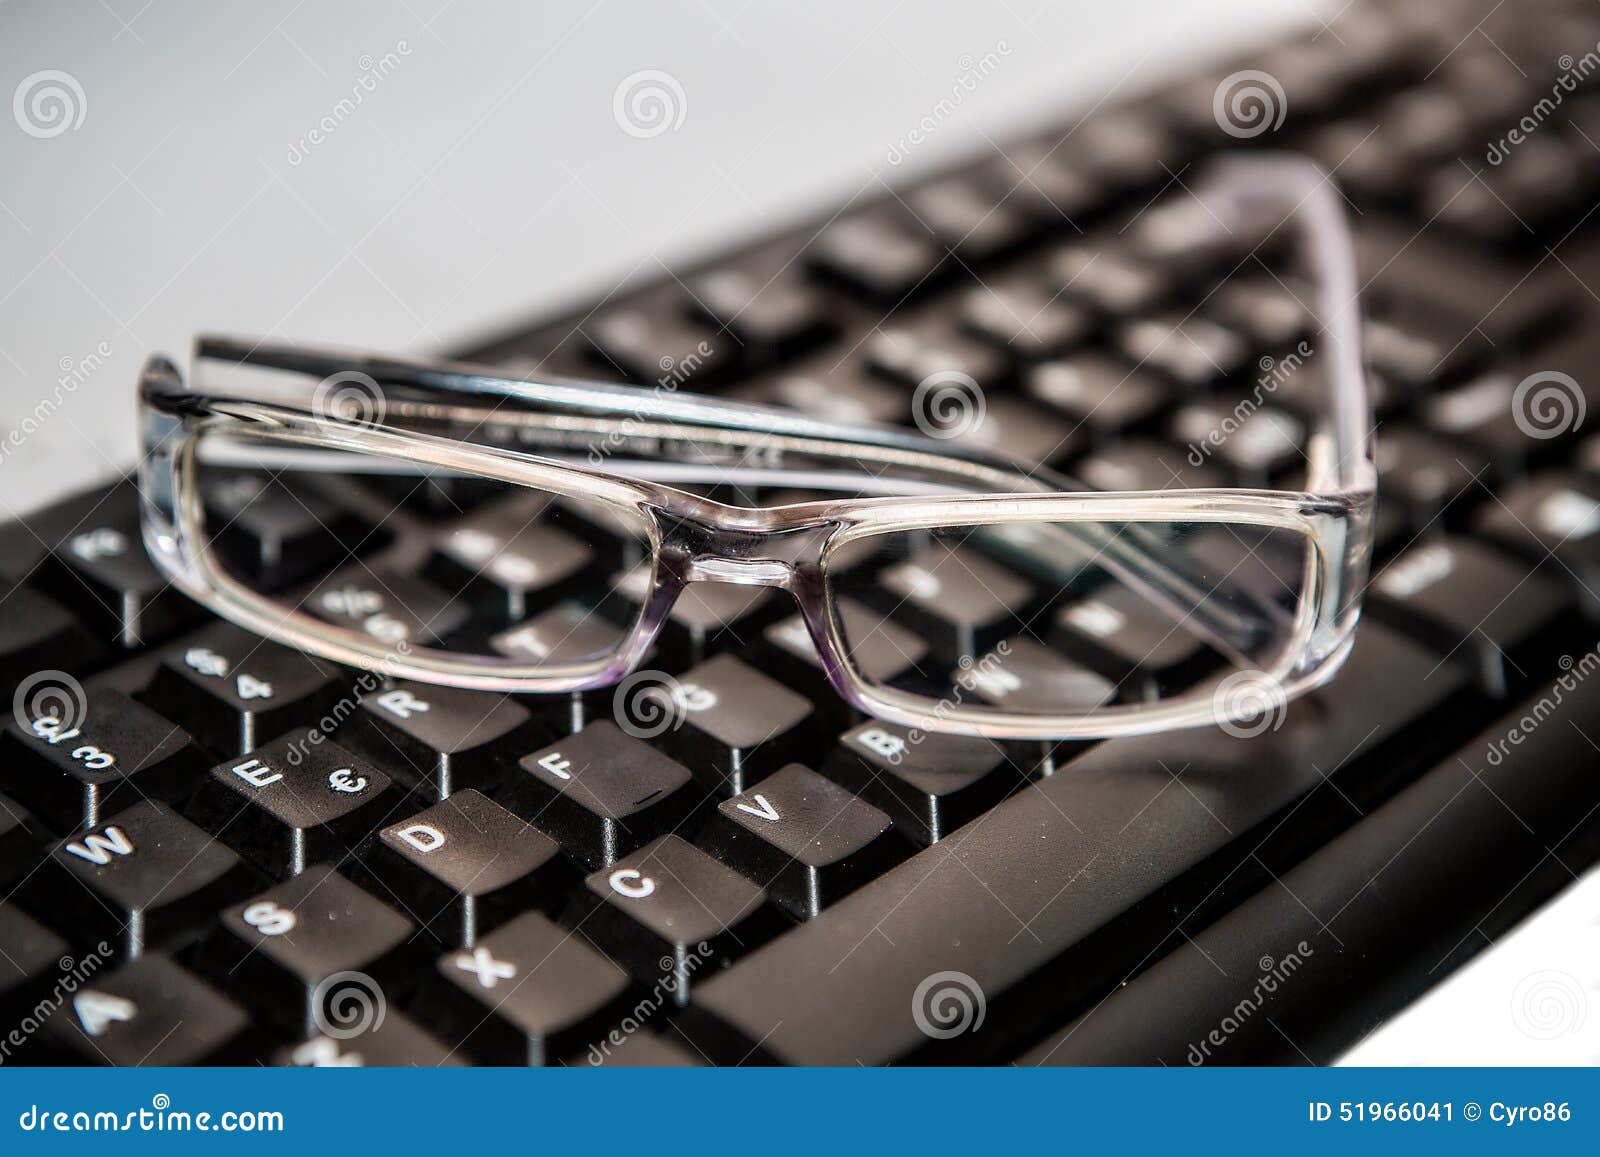 eyeglasses with keyboard